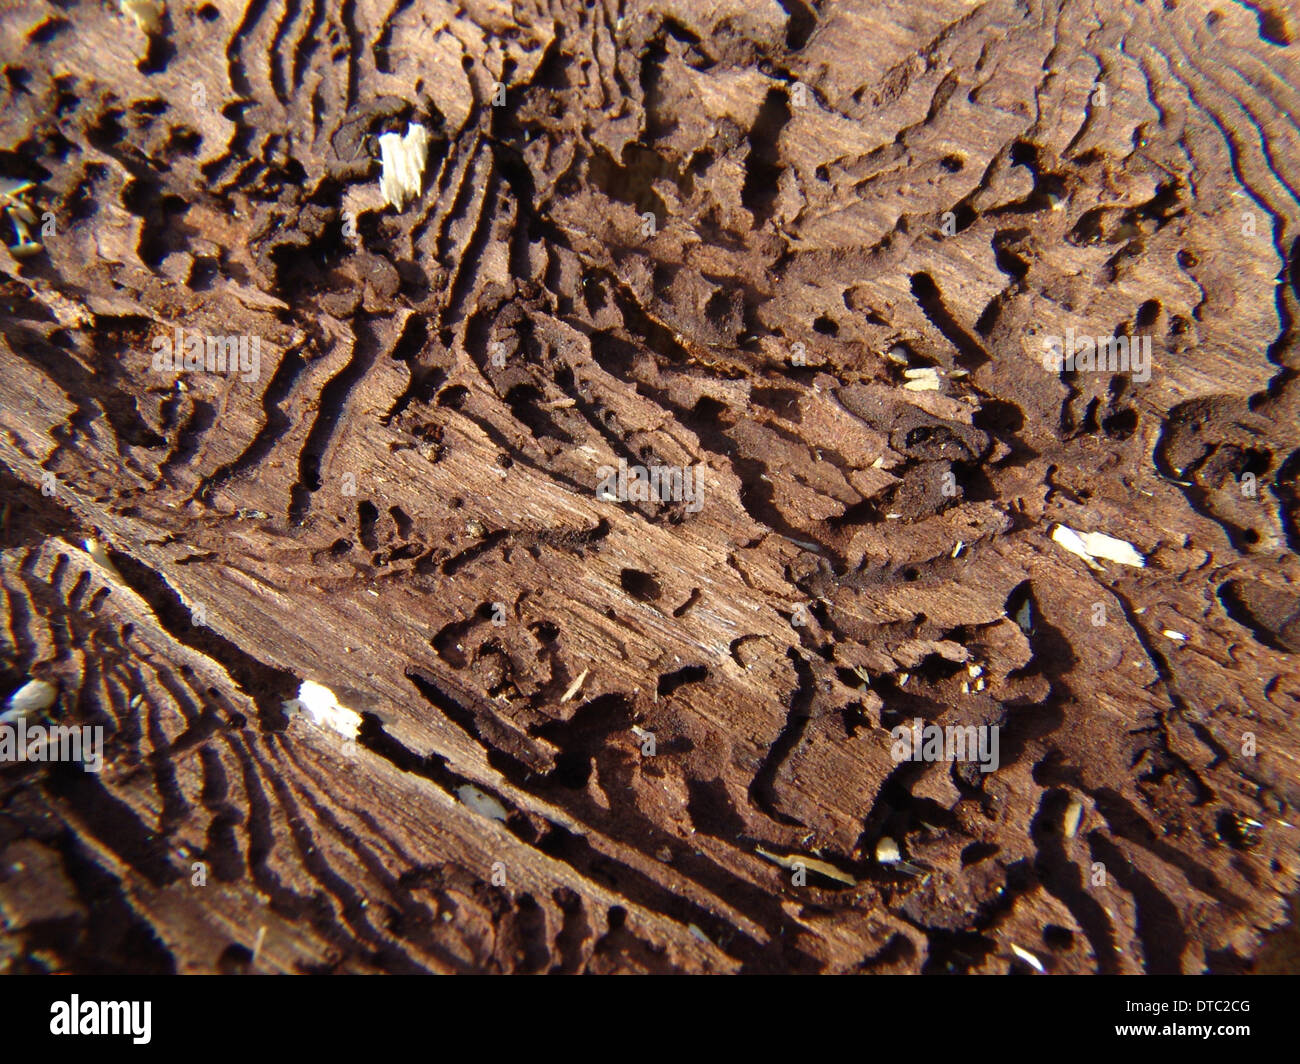 Relikts of bark-beetles Stock Photo